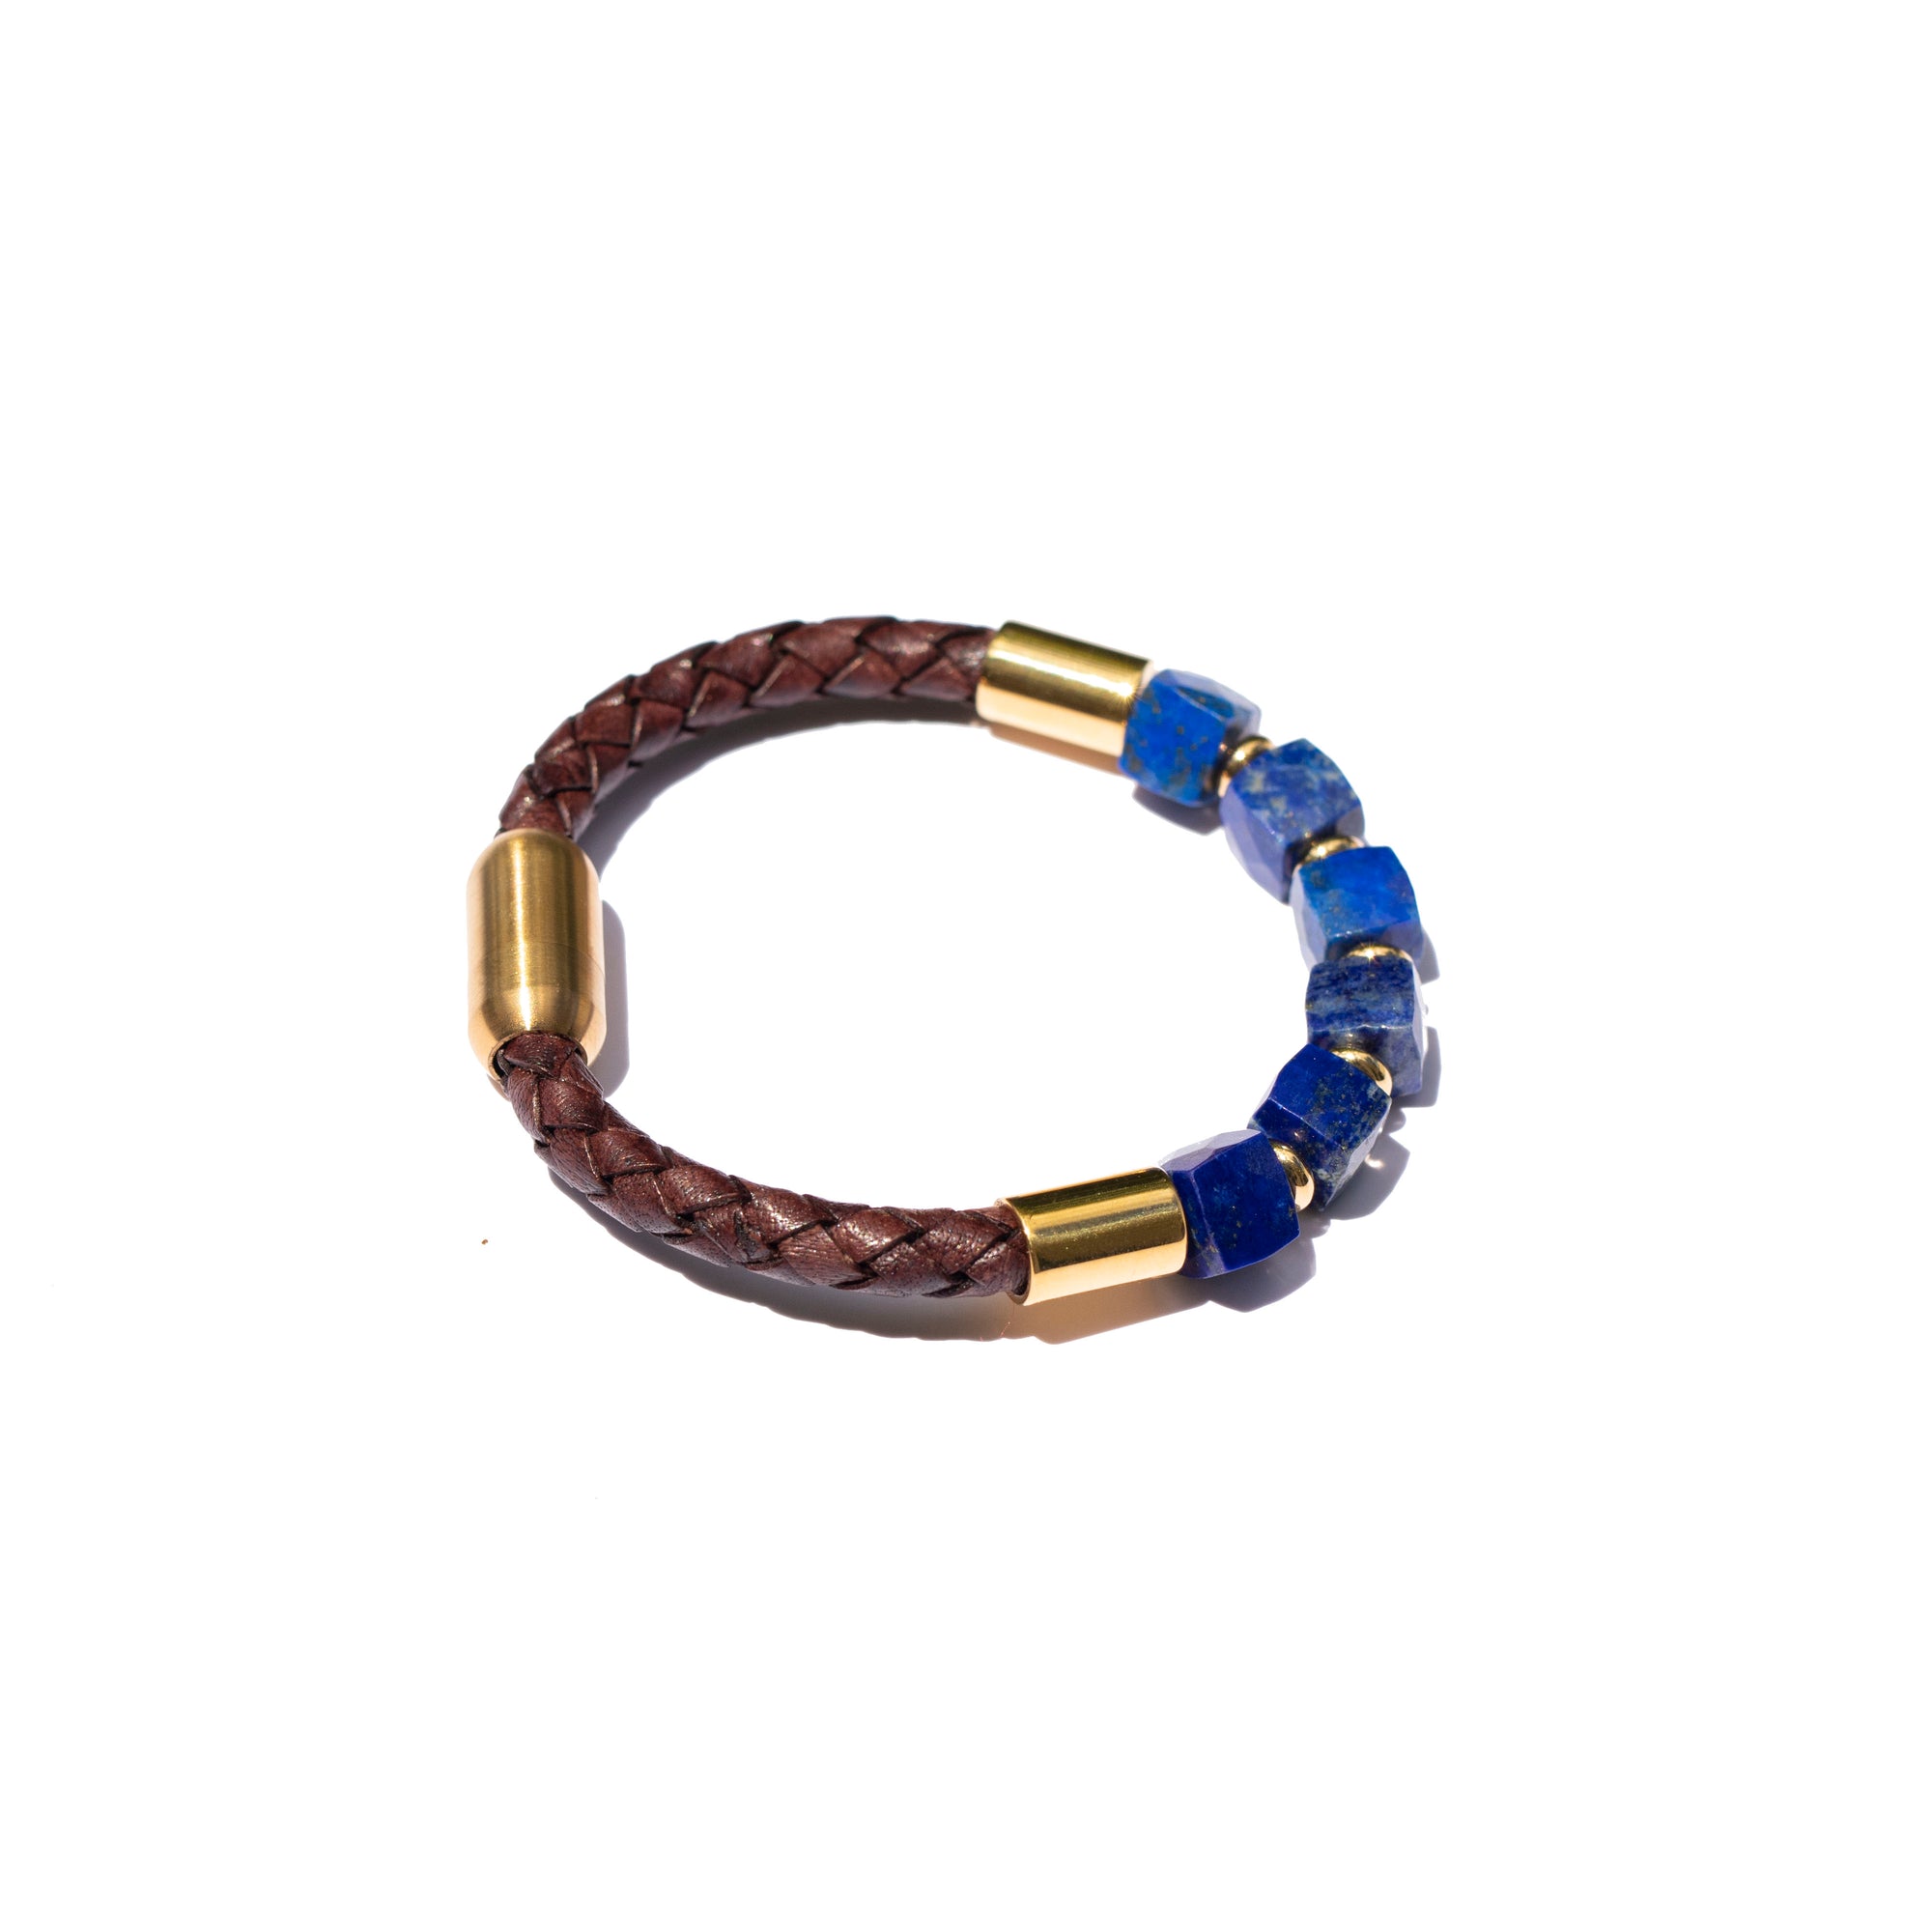 Storyteller Collection: Lapis Lazuli, 24K Gold vermeil & Leather Bracelet